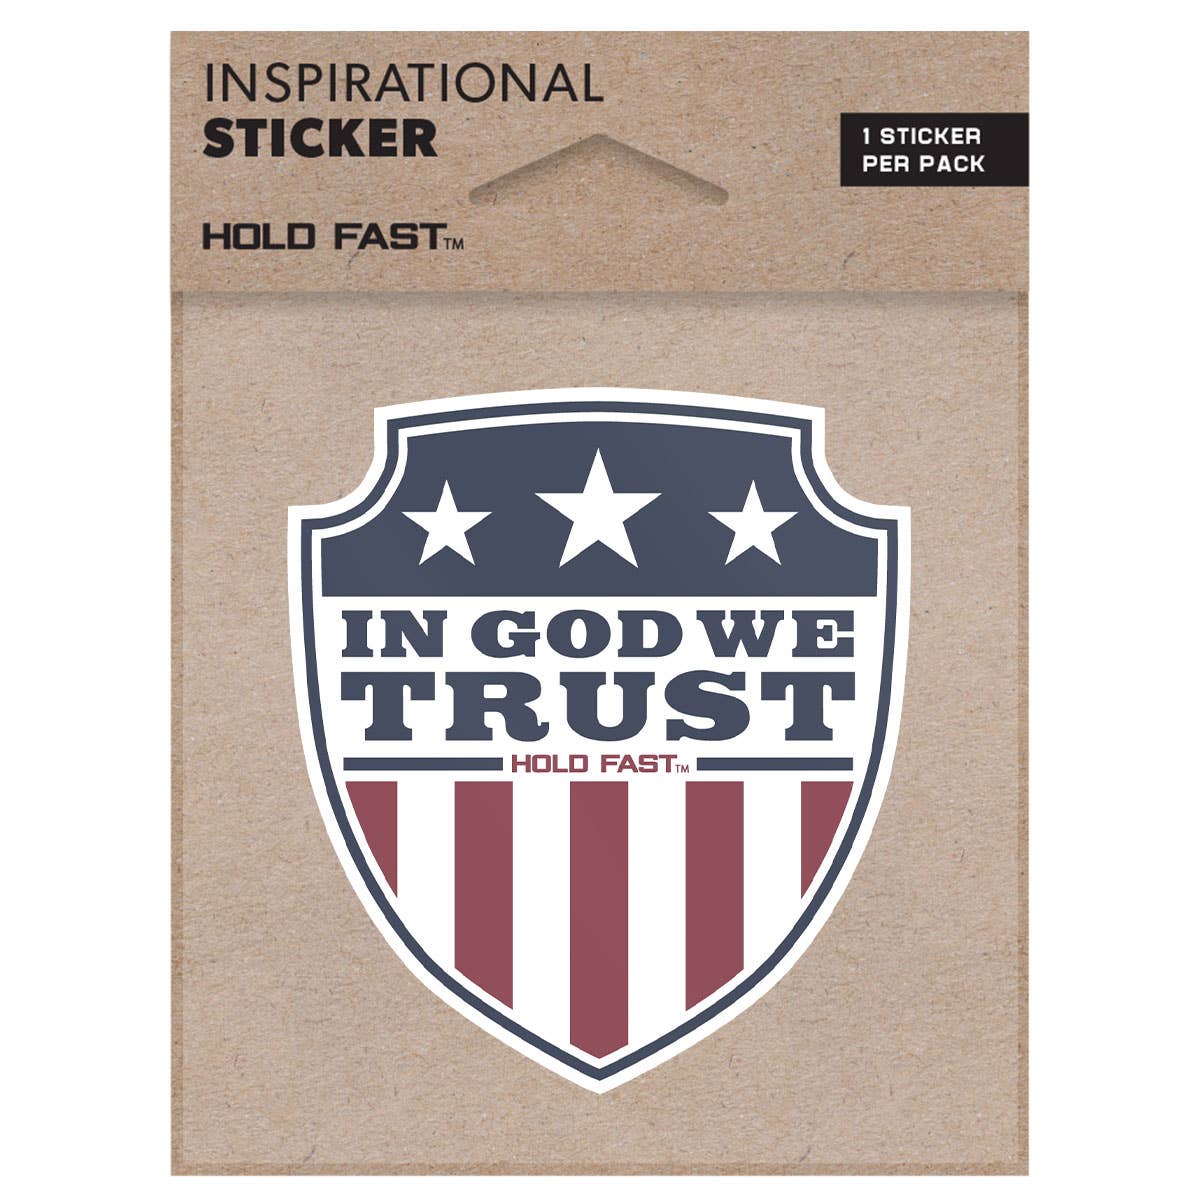 HOLD FAST In God We Trust Shield Sticker